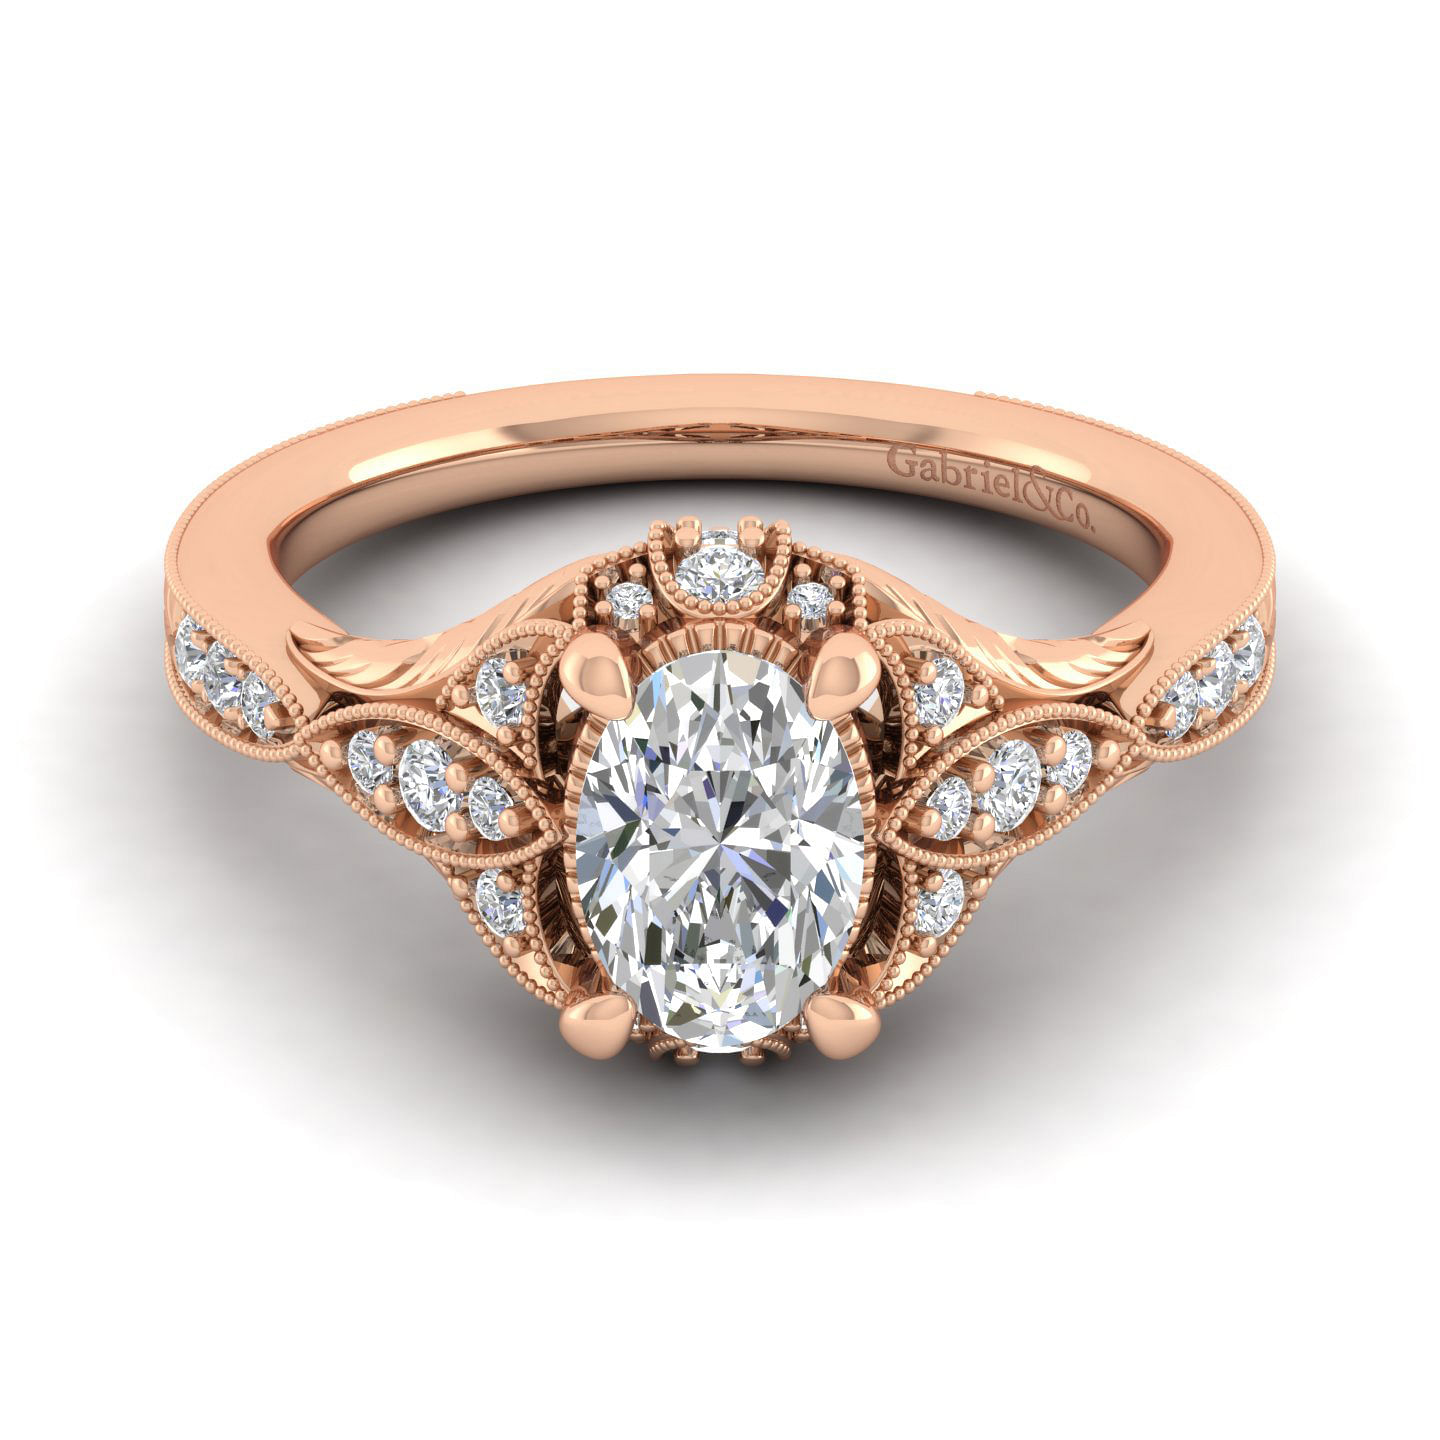 Windsor - Unique 14K Rose Gold Vintage Inspired Oval Halo Diamond Engagement Ring